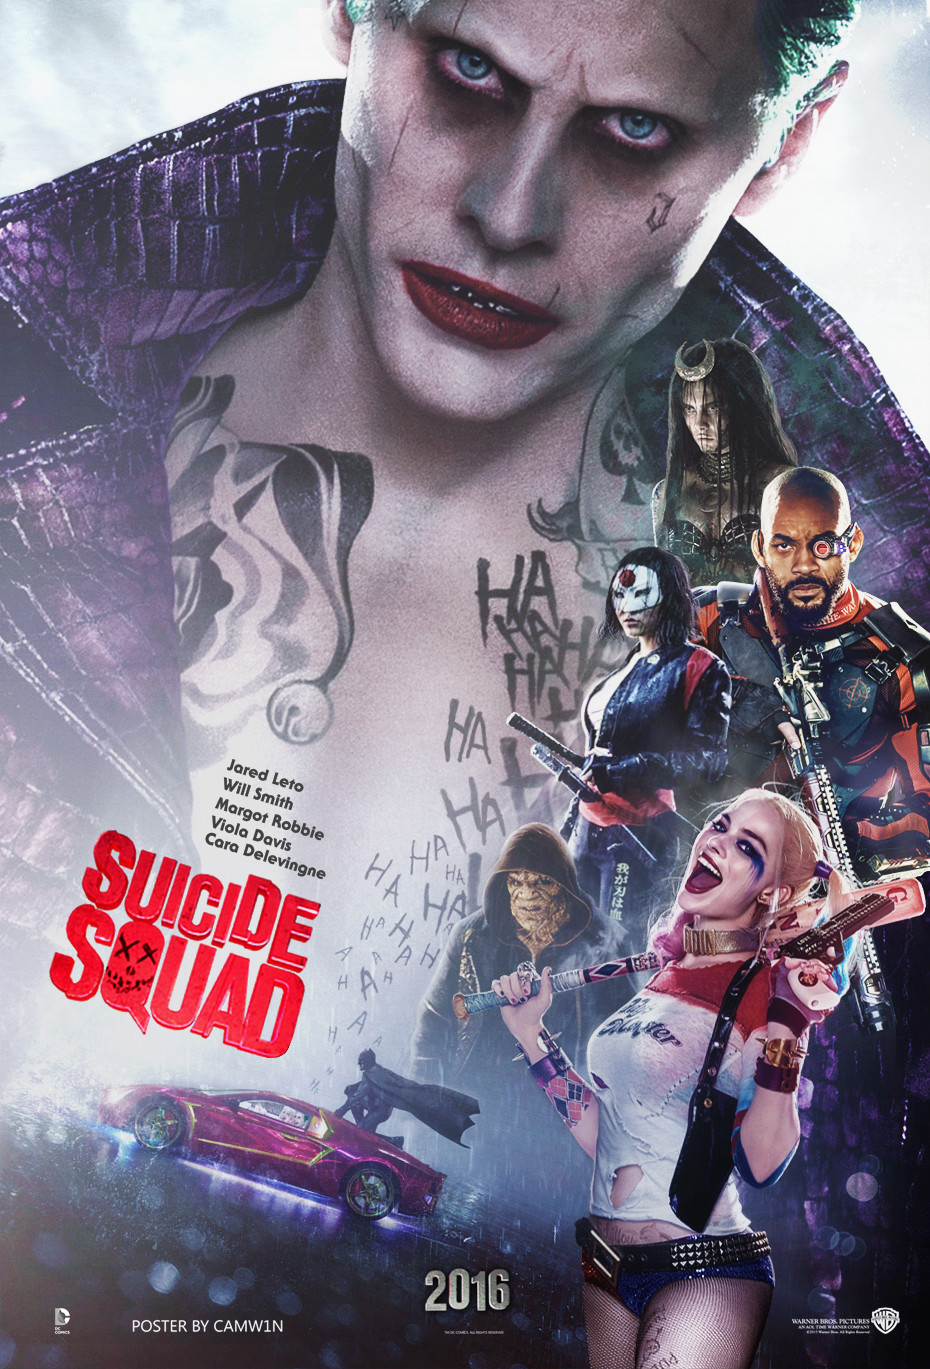 Suicide Squad Movie 2016 wallpaper HD Free desktop background 2016 in